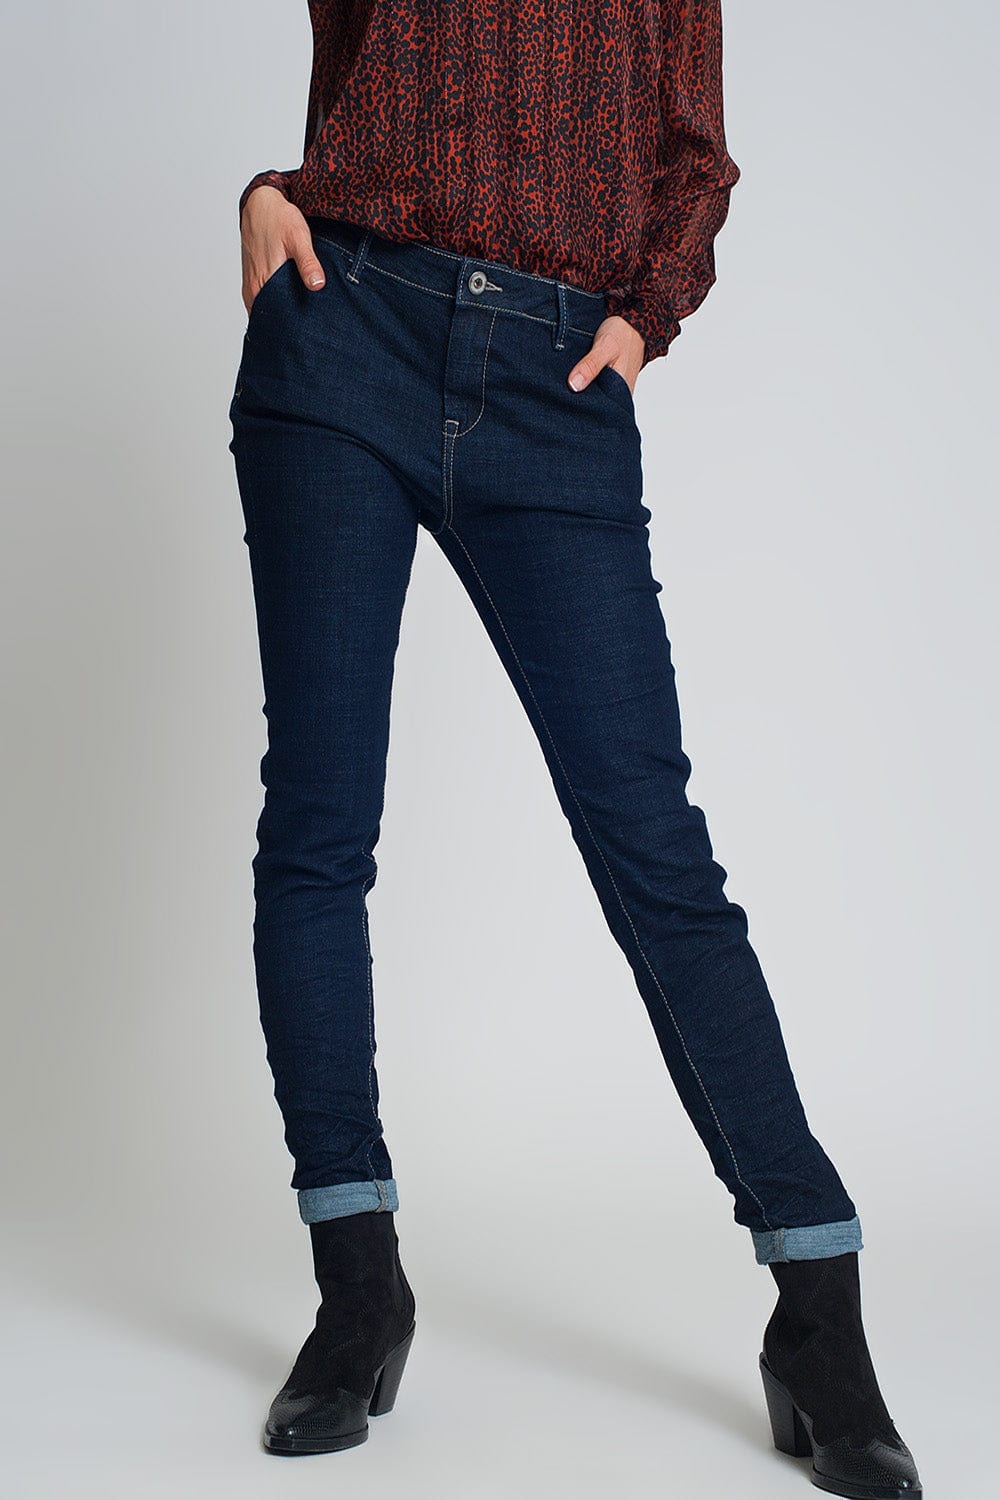 Q2 Women's Jean Jeans Skinny Cut Chino Style